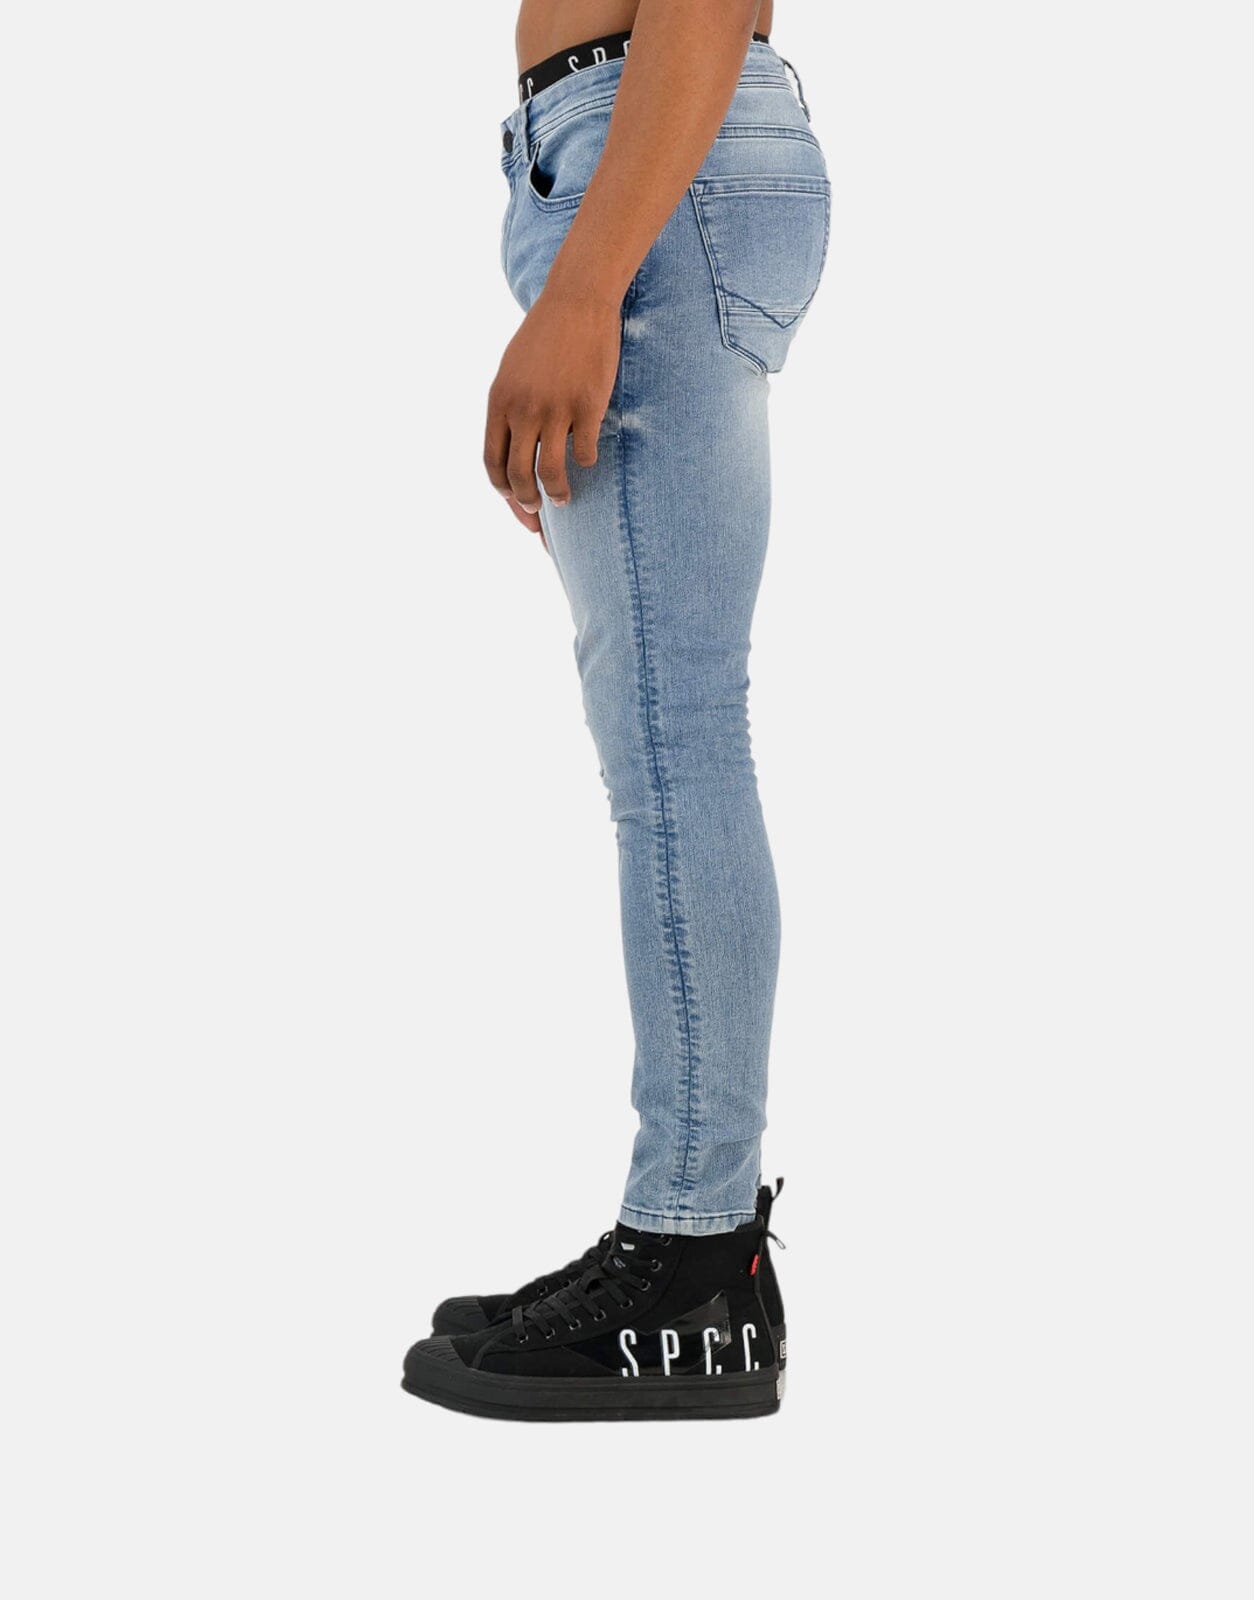 SPCC Rincon Jeans Blue - Subwear